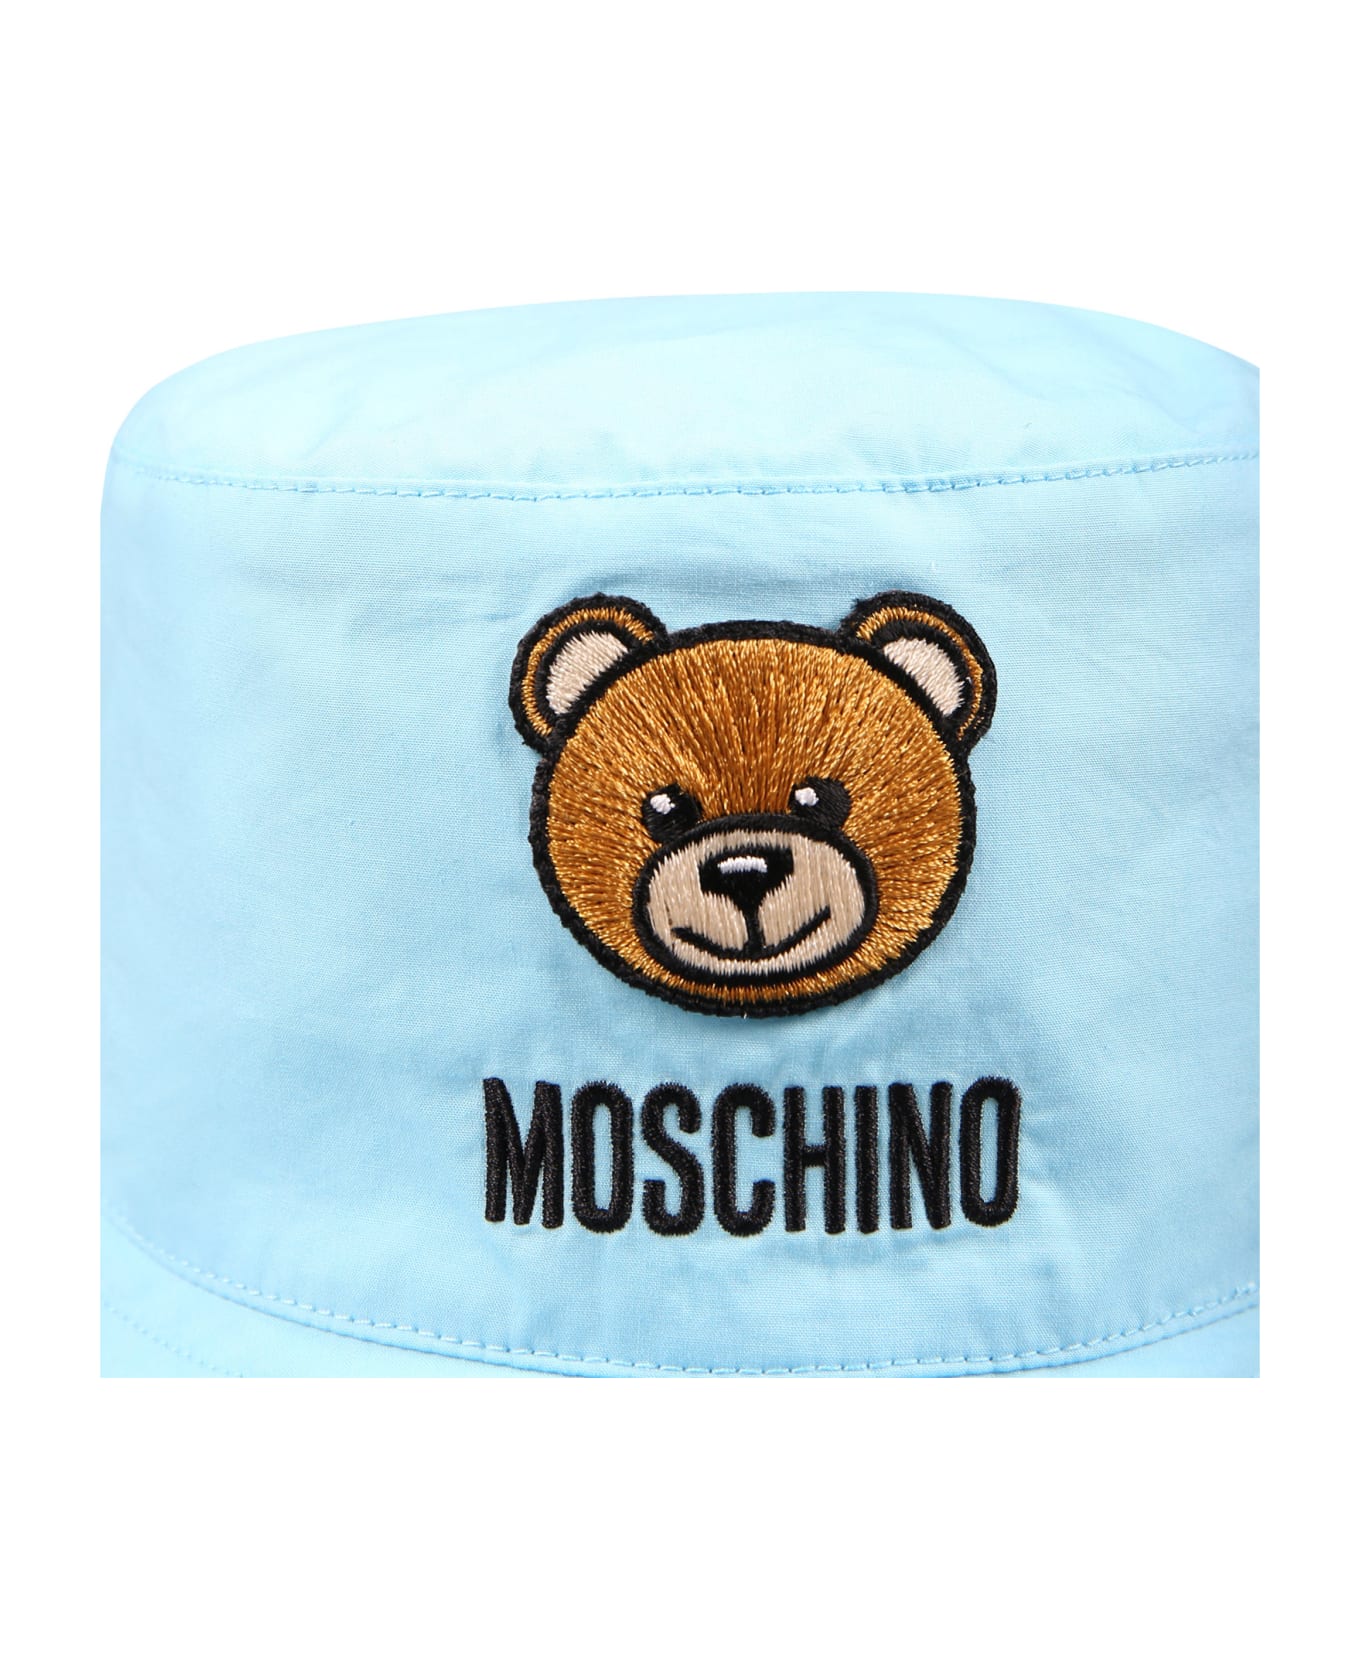 Moschino Sky Blue Cloche For Baby Boy With Teddy Bear - Light Blue